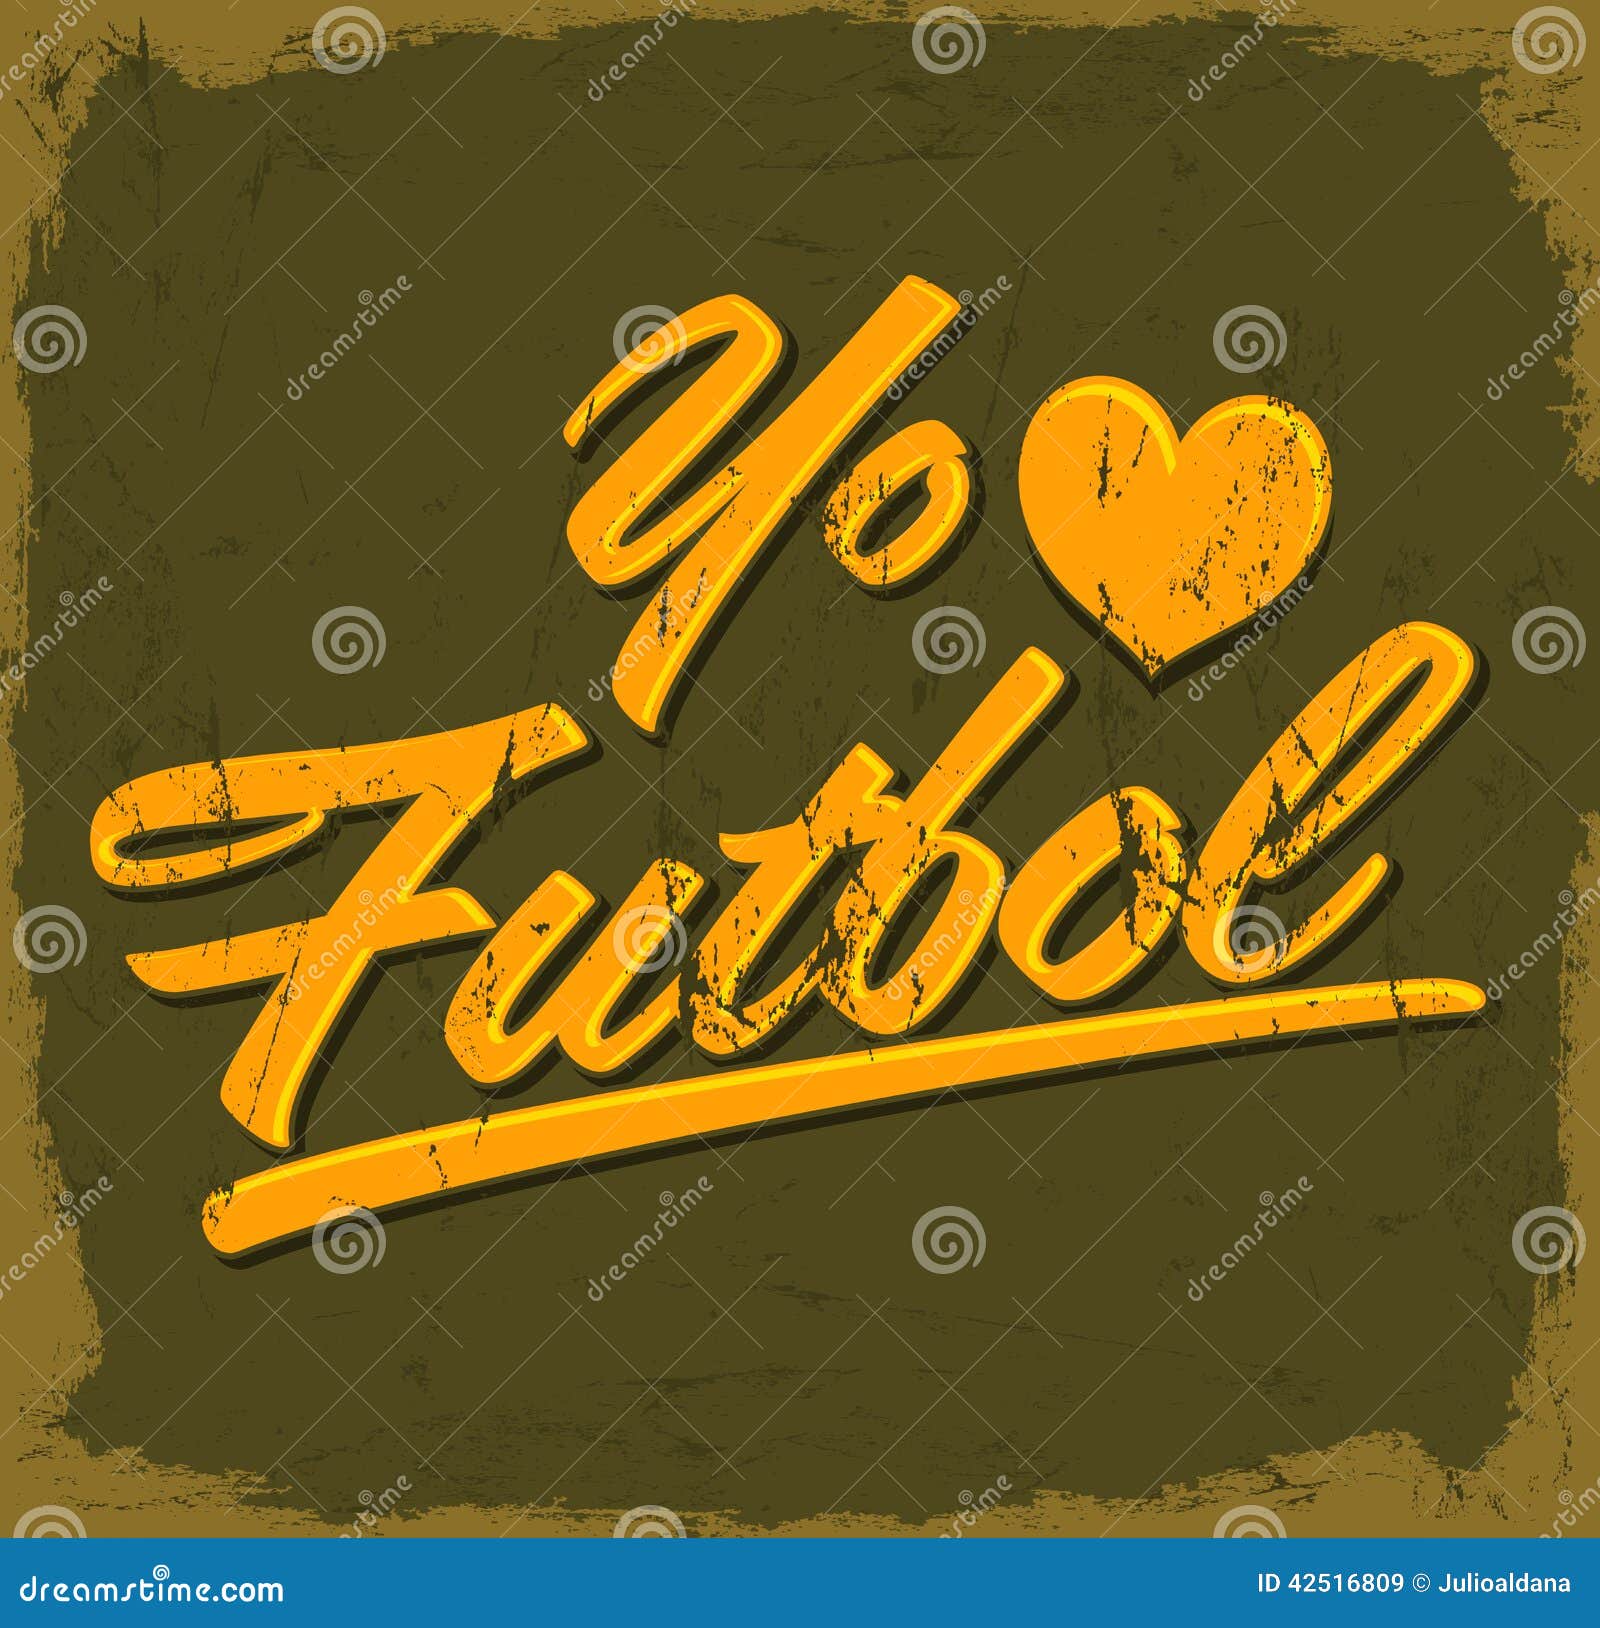 yo amo el futbol - i love soccer - football spanish text